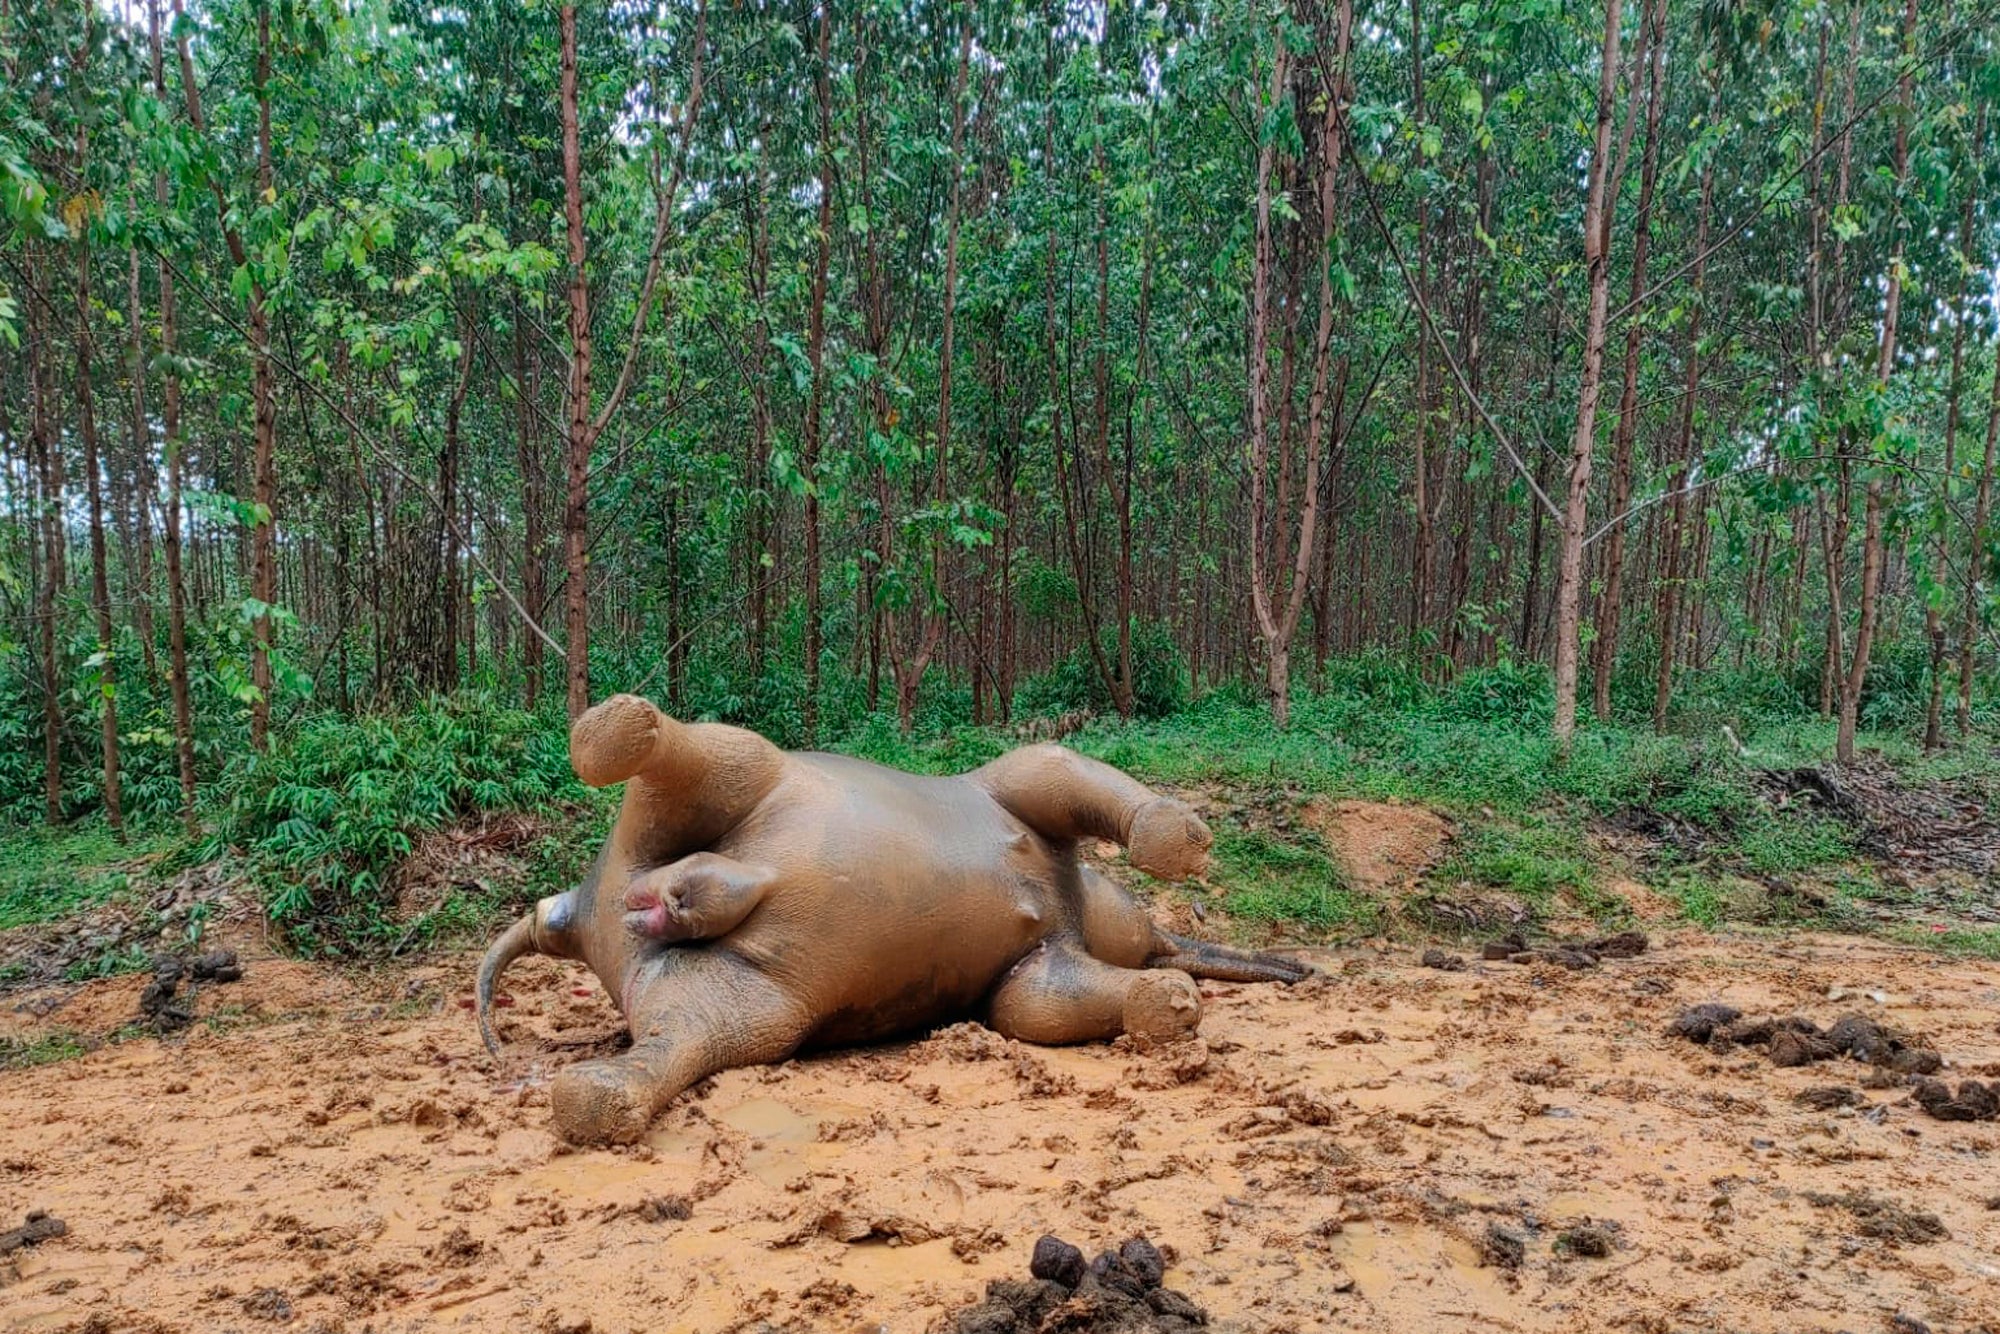 The elephant was found dead near a palm plantation in Riau province in Sumatra, Indonesia